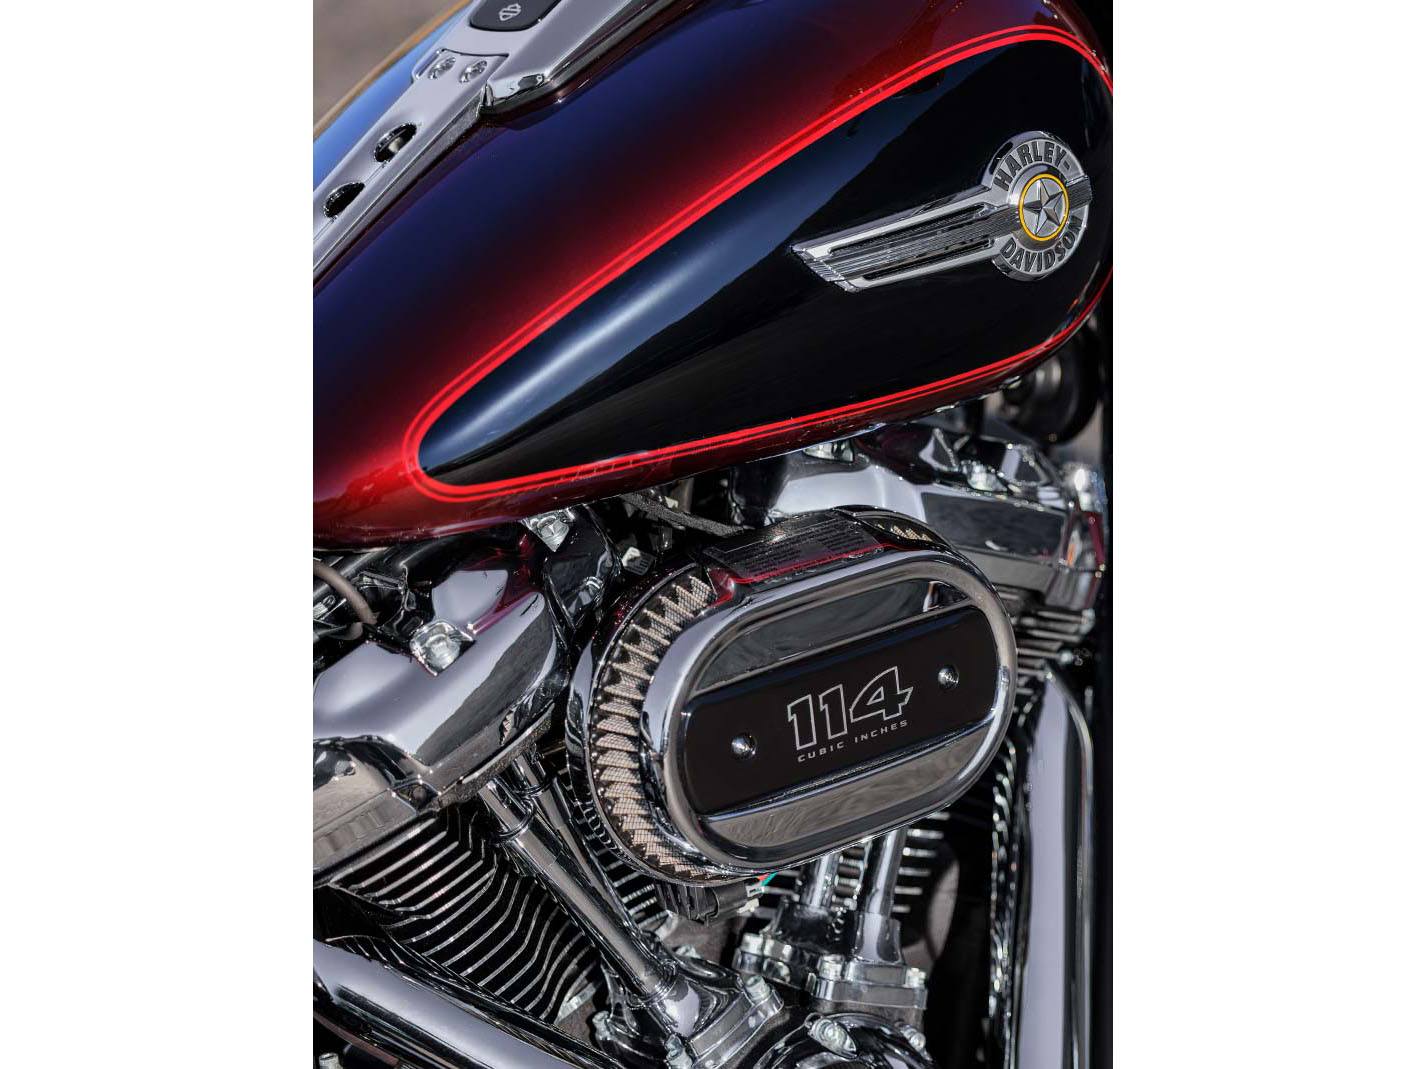 2022 Harley-Davidson Fat Boy® 114 in West Long Branch, New Jersey - Photo 3